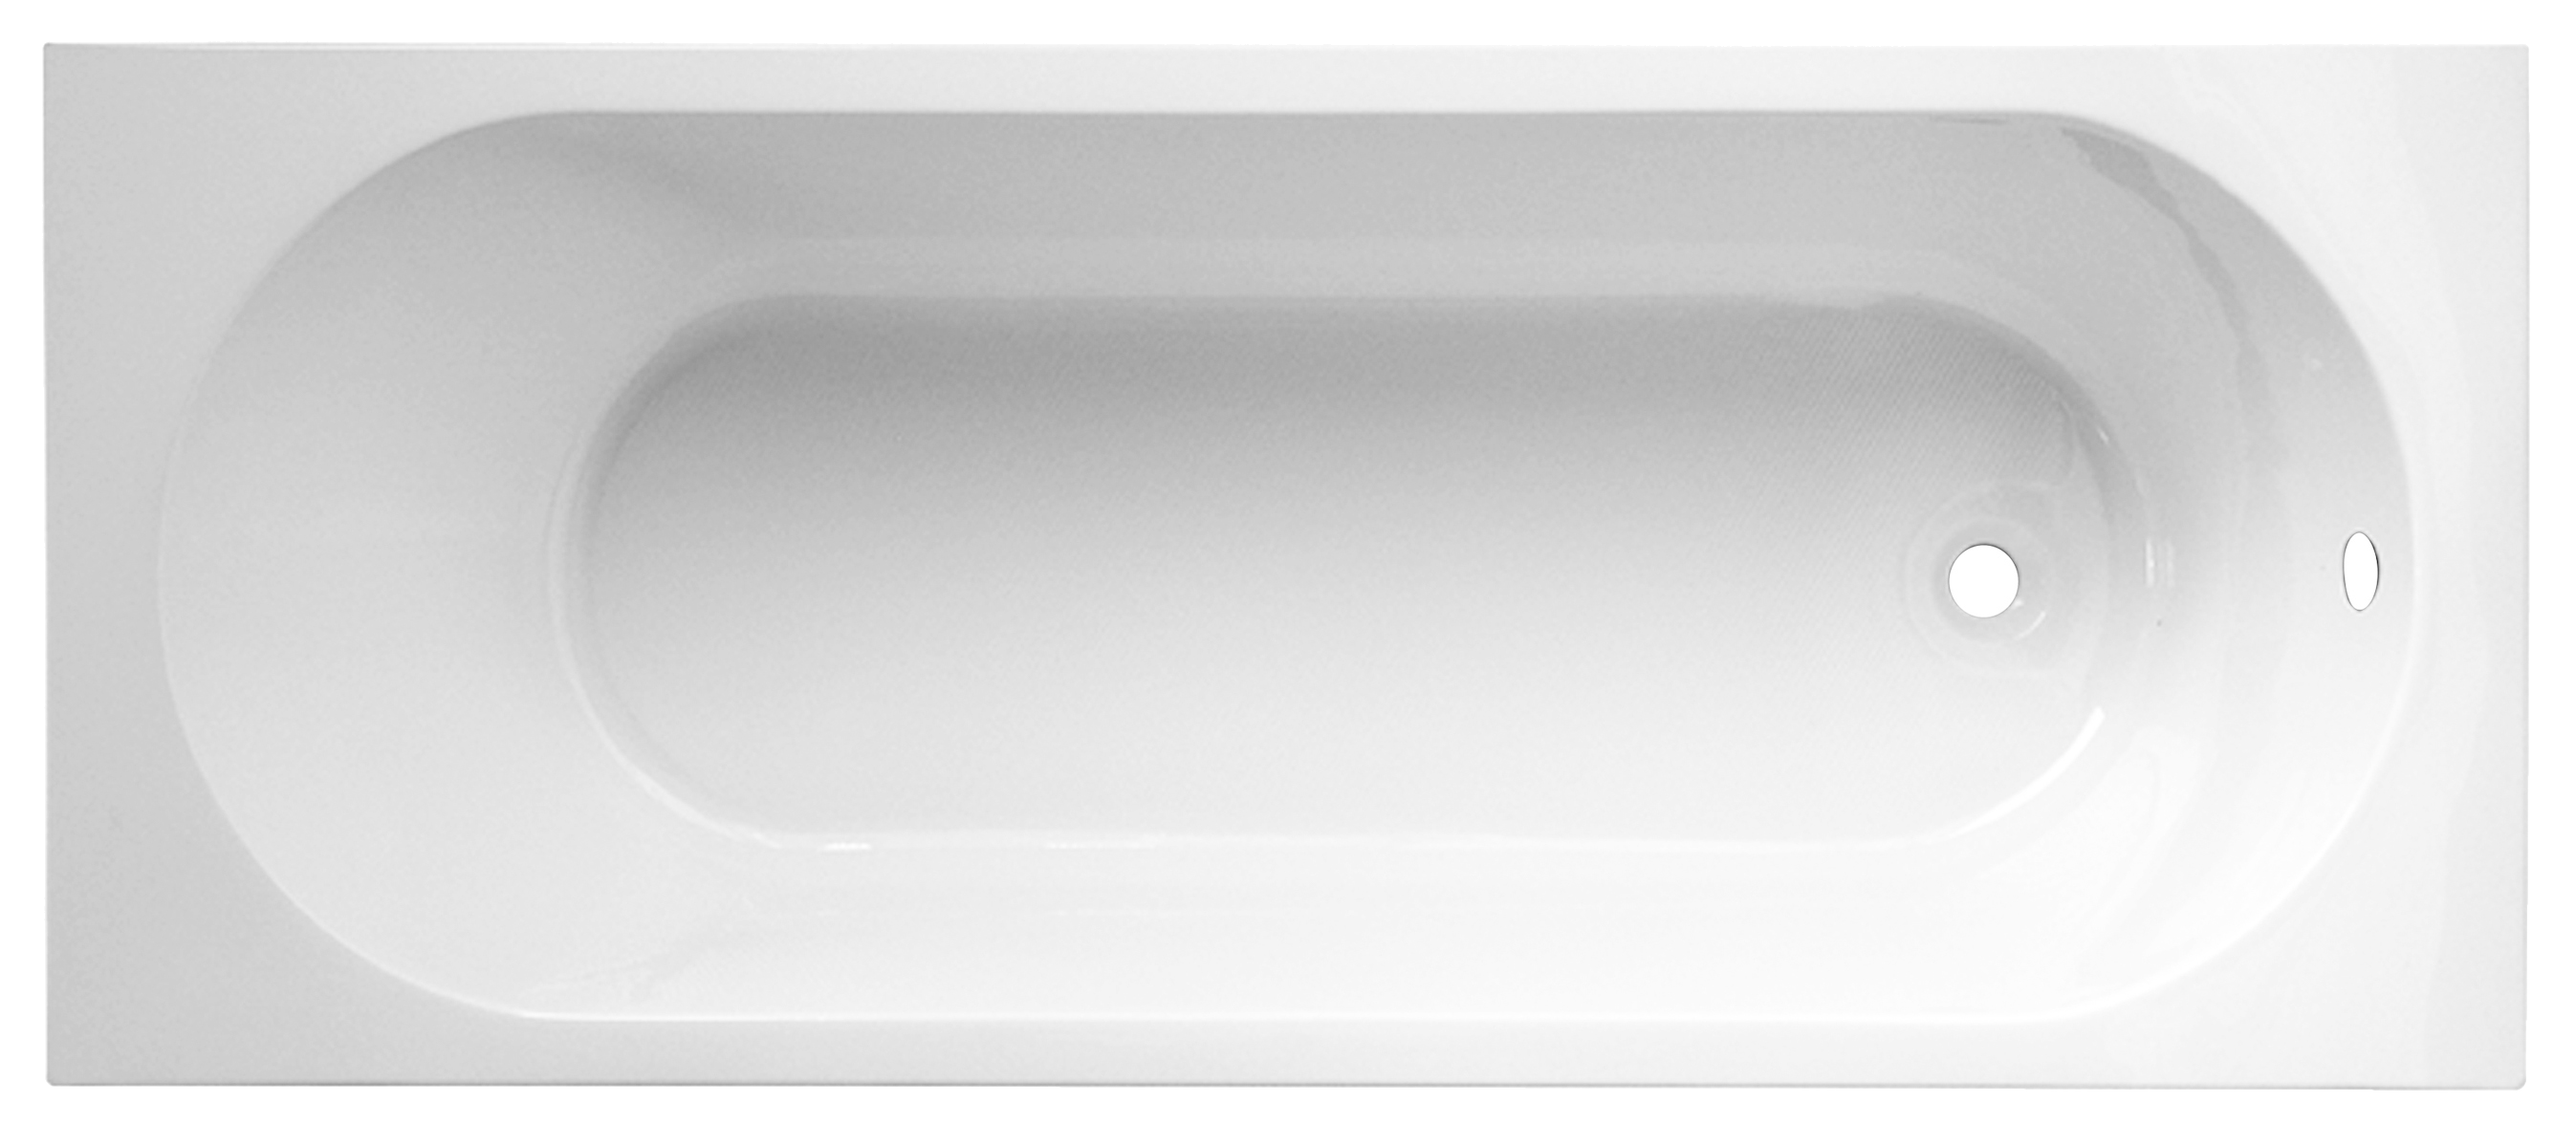 Bañera rectangular sanycces nerea 150x70x40 cm